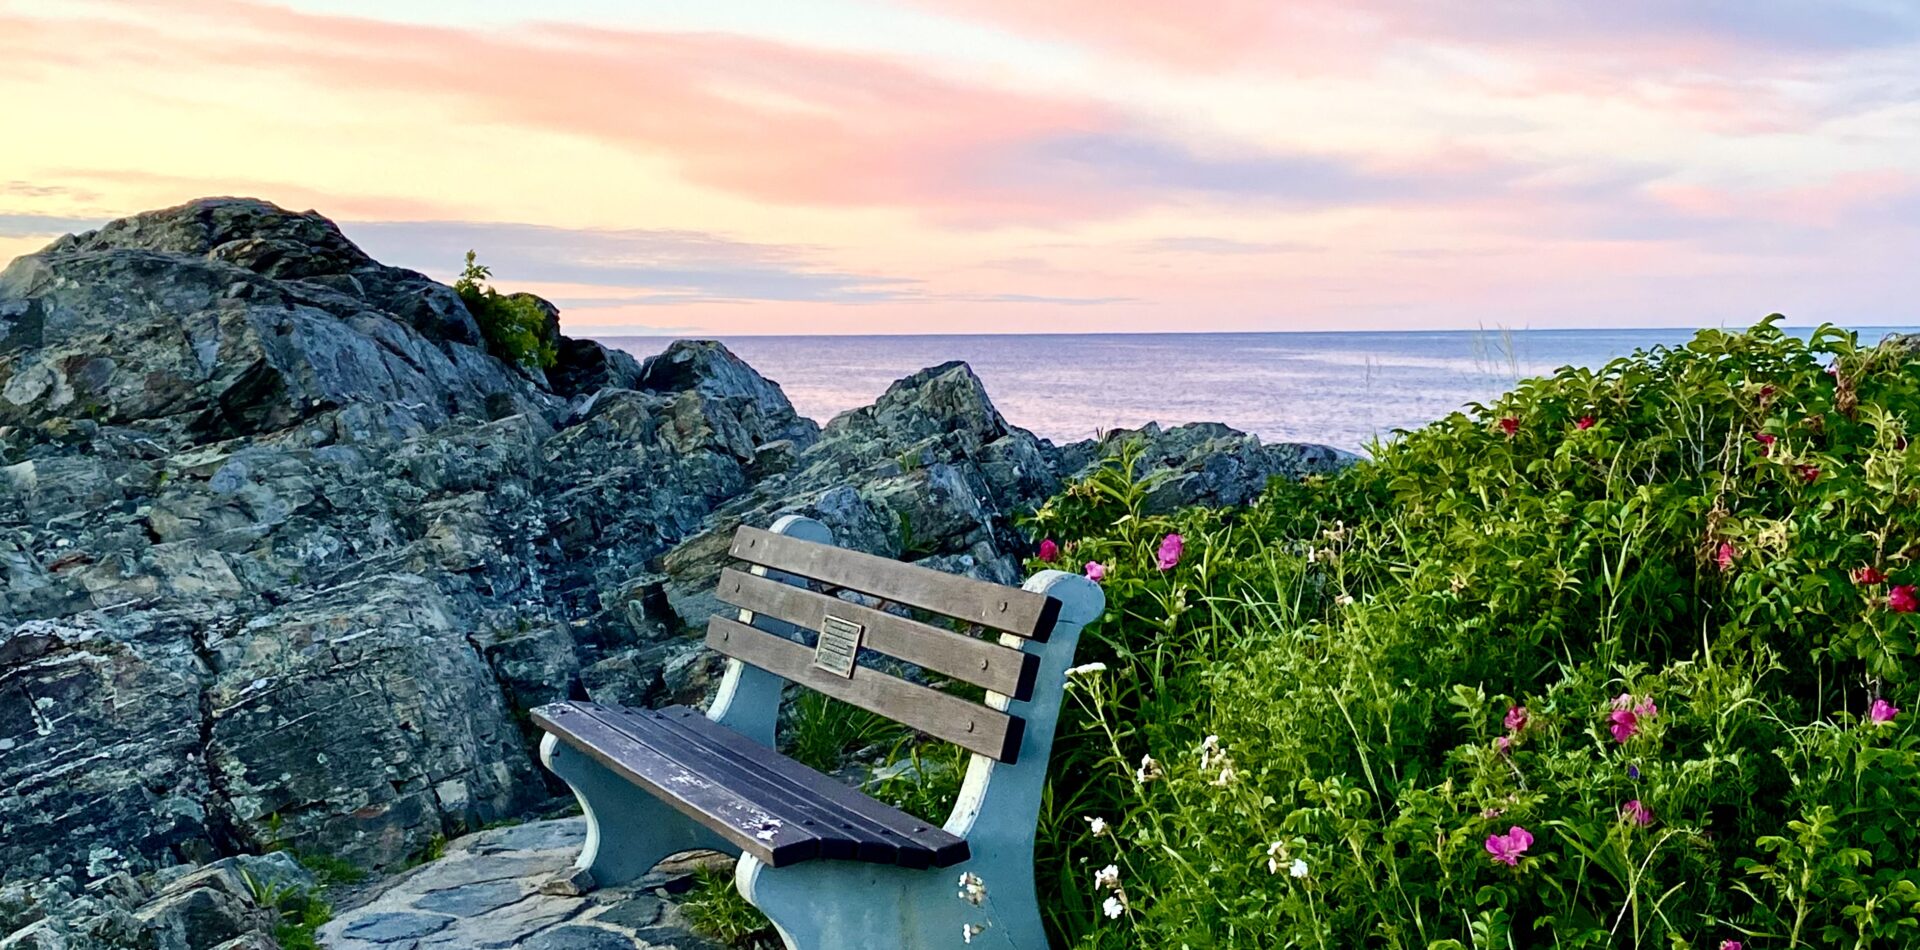 Rocks, bench, beach roses, Marginal way